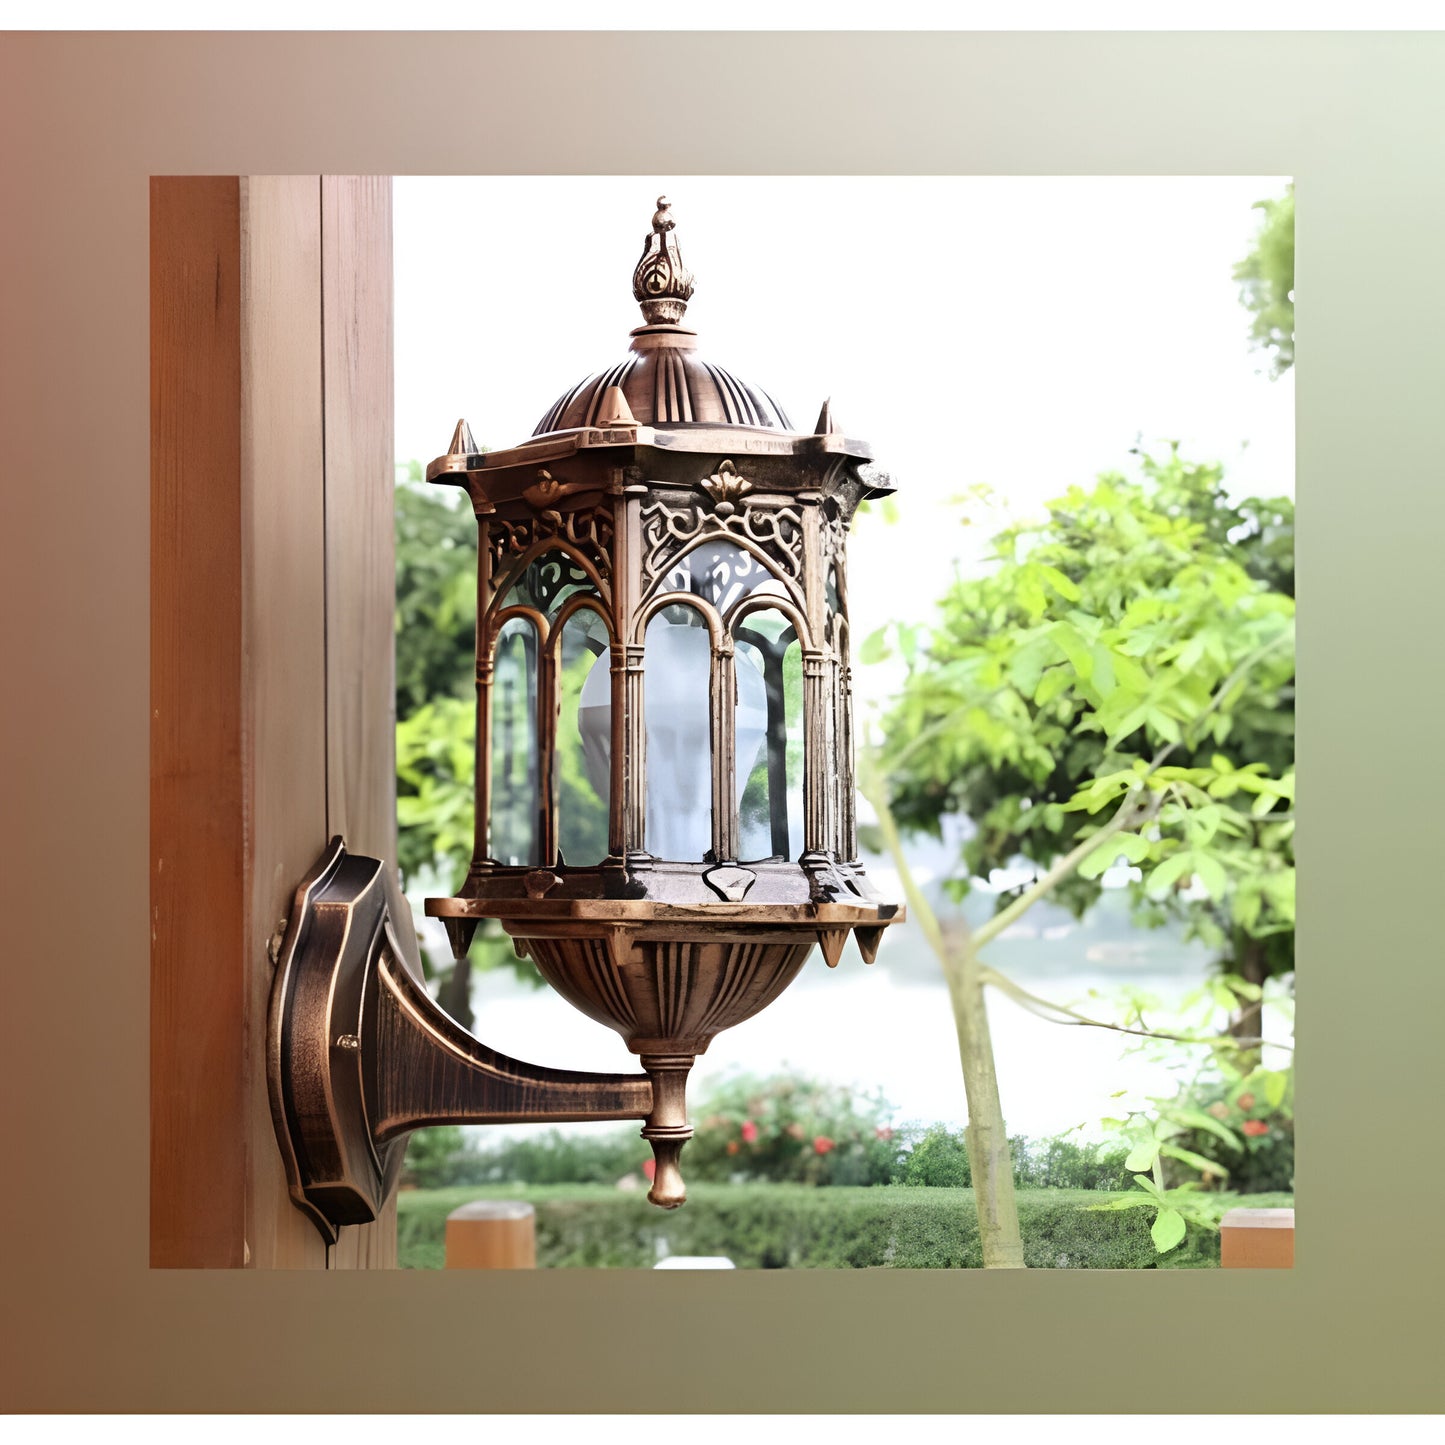 Antique Outdoor Wall Lantern Light - Waterproof, Anti-Rust & Elegant Lighting